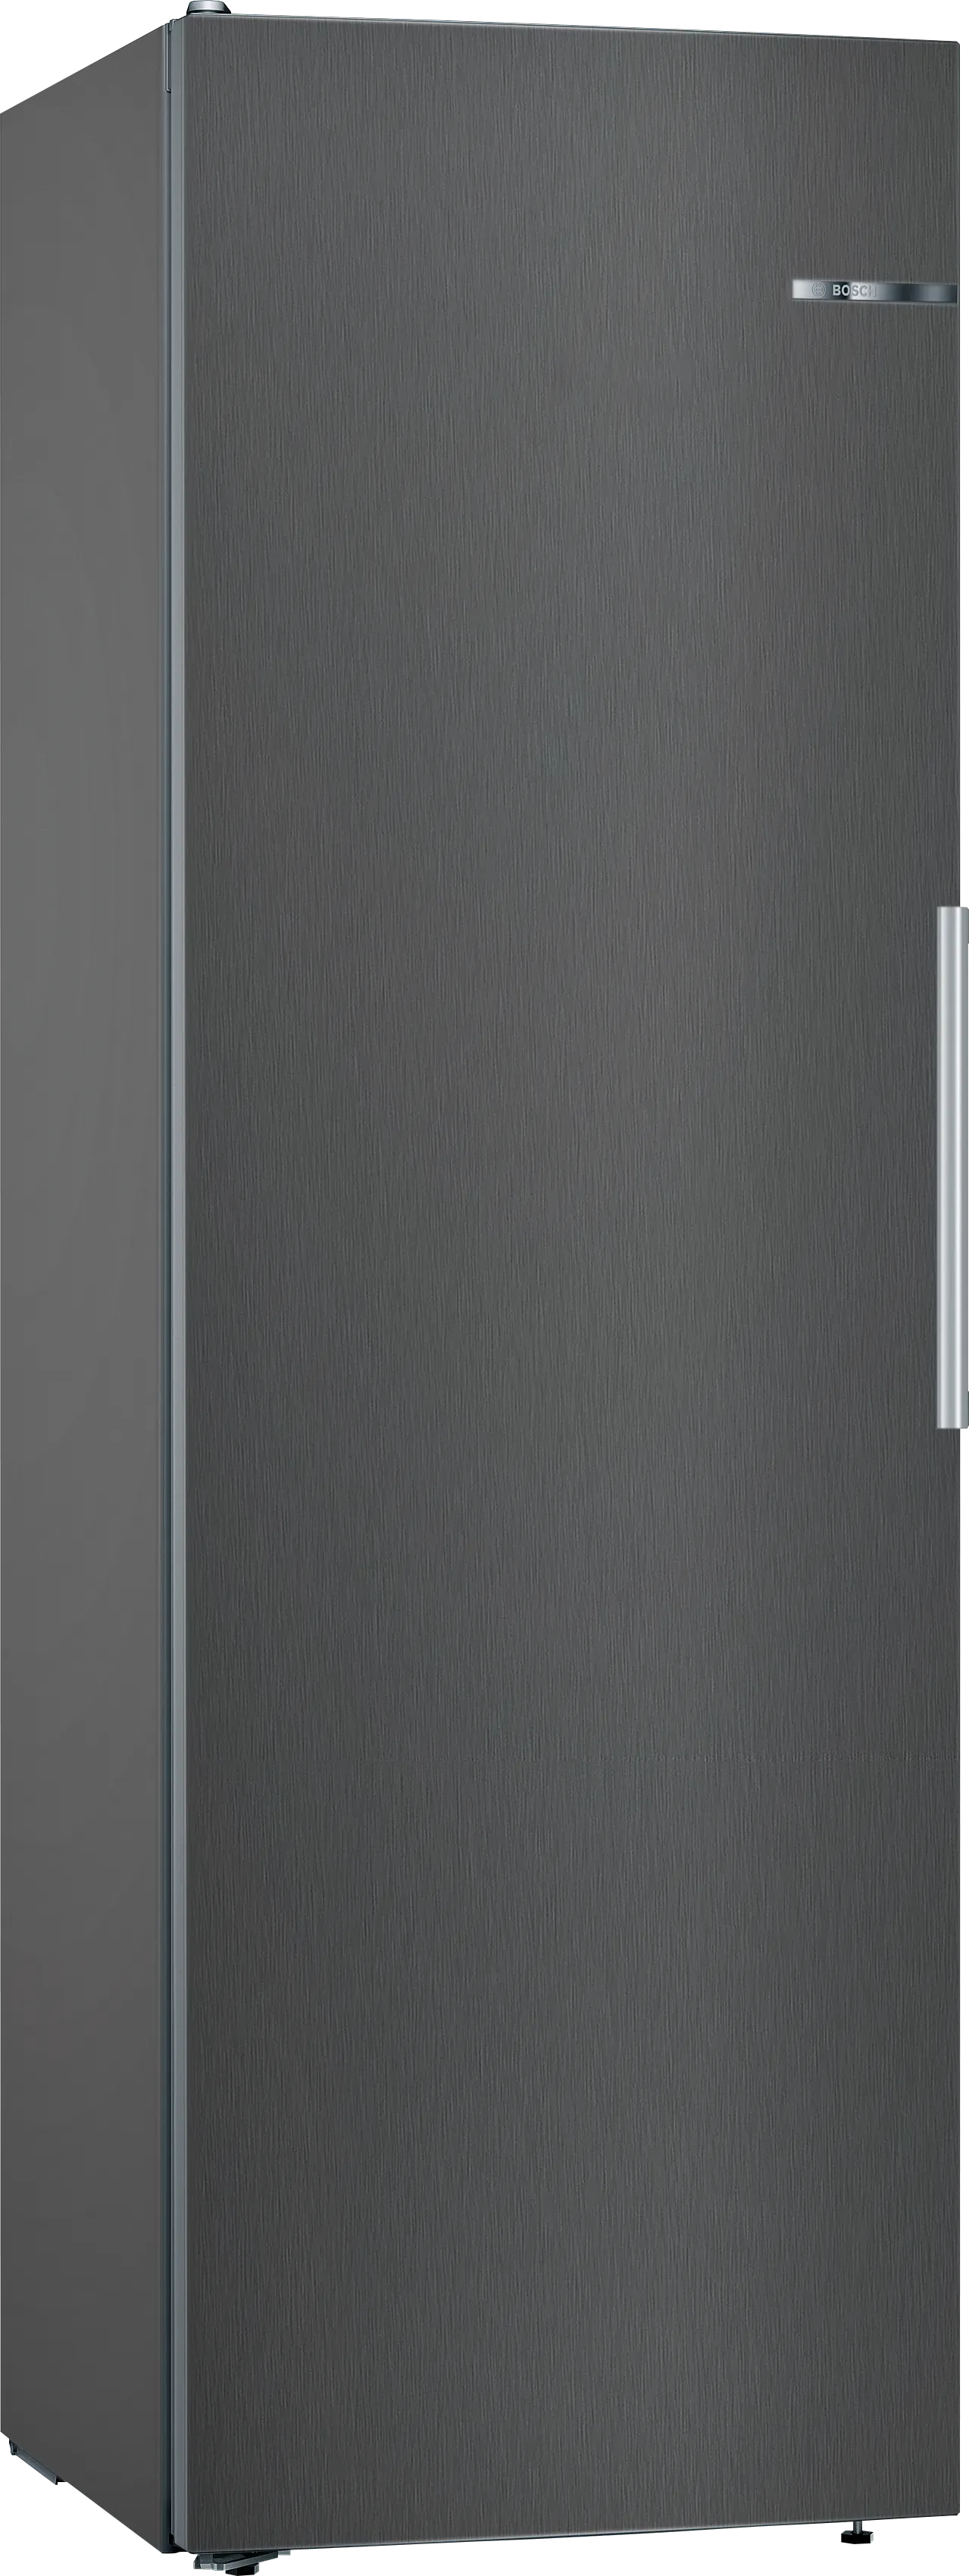 Series 4 free-standing fridge 186 x 60 cm Black stainless steel 